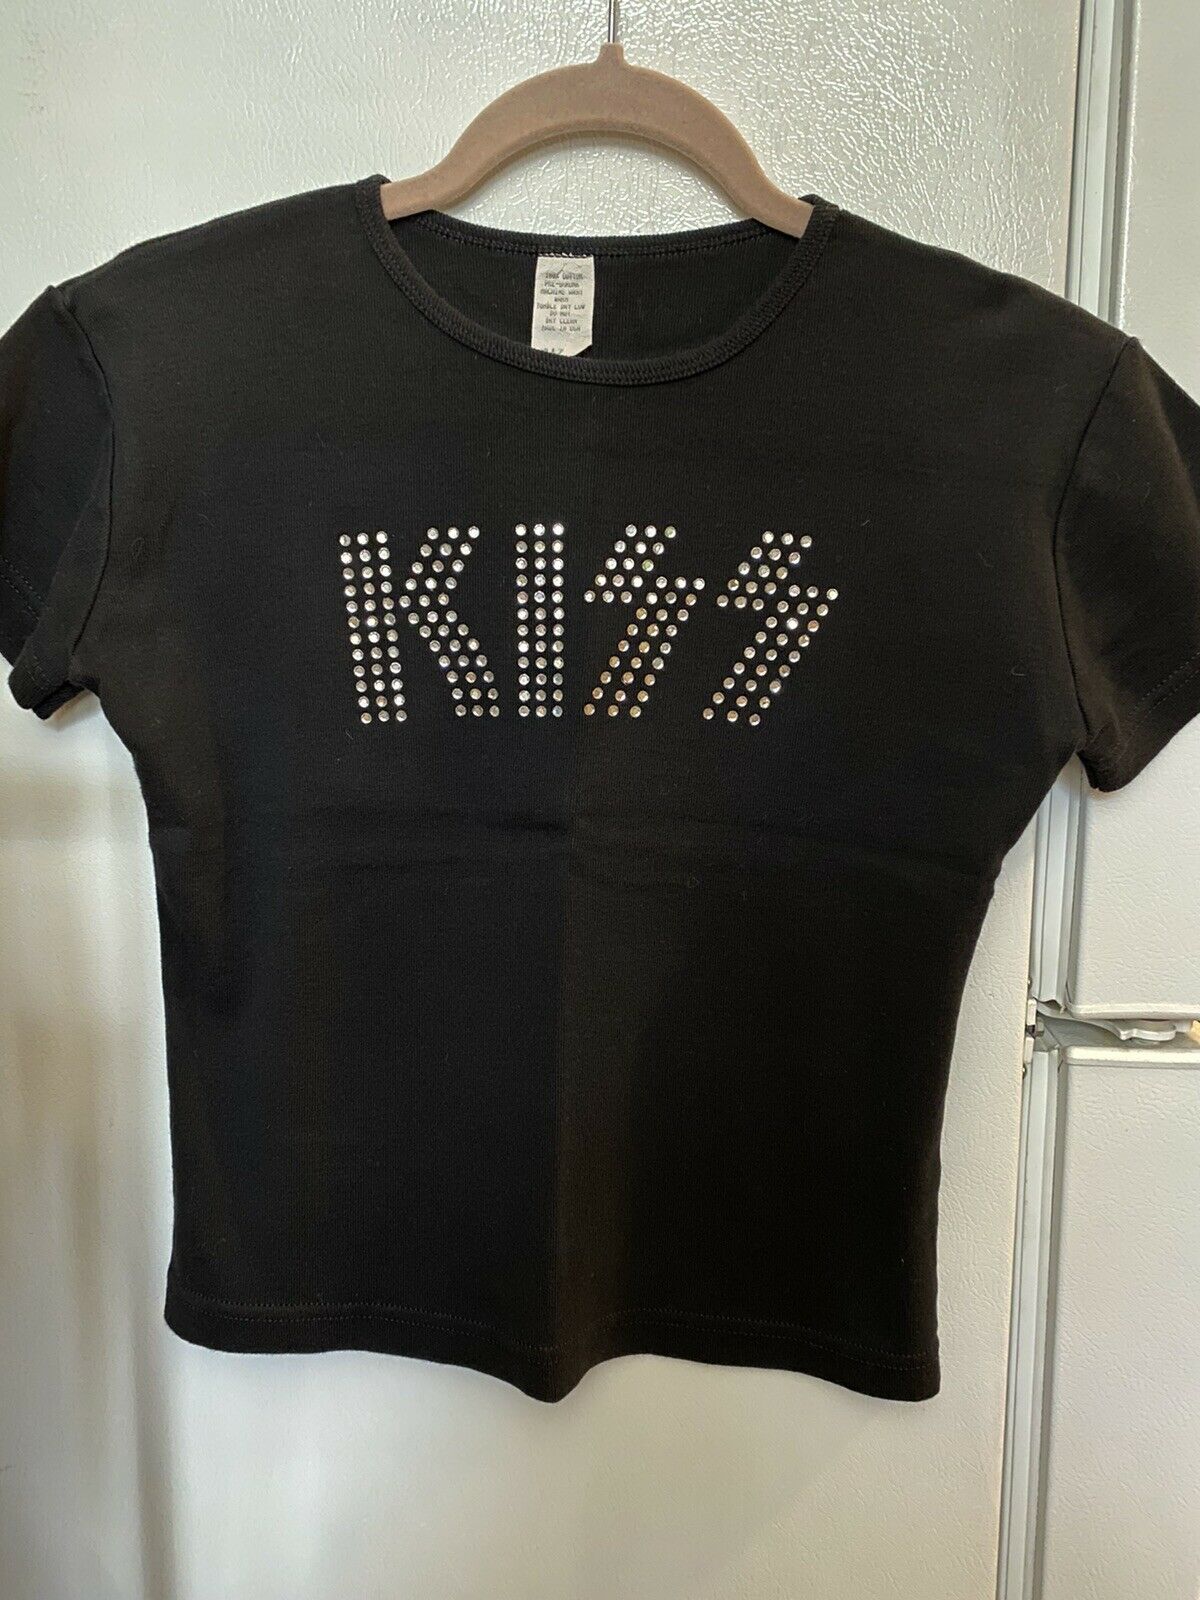 Kiss 2000 Farewell Tour T-shirt Women's Rhinestone Small Black